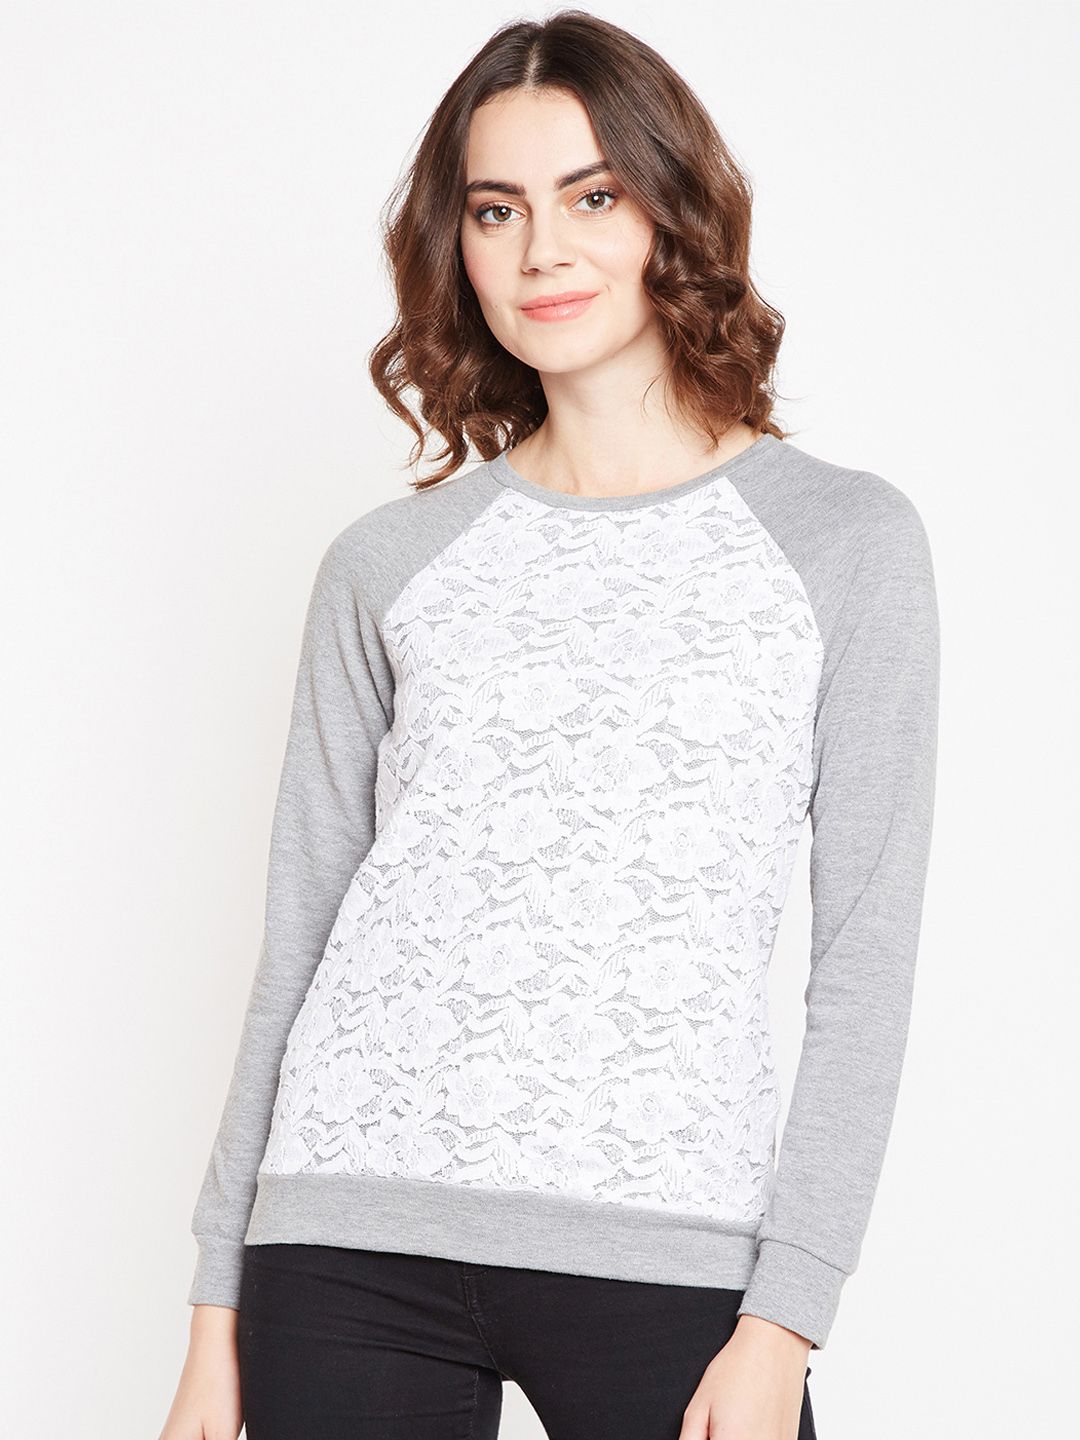 Taanz Women Grey & White Self Design Pullover Sweater Price in India